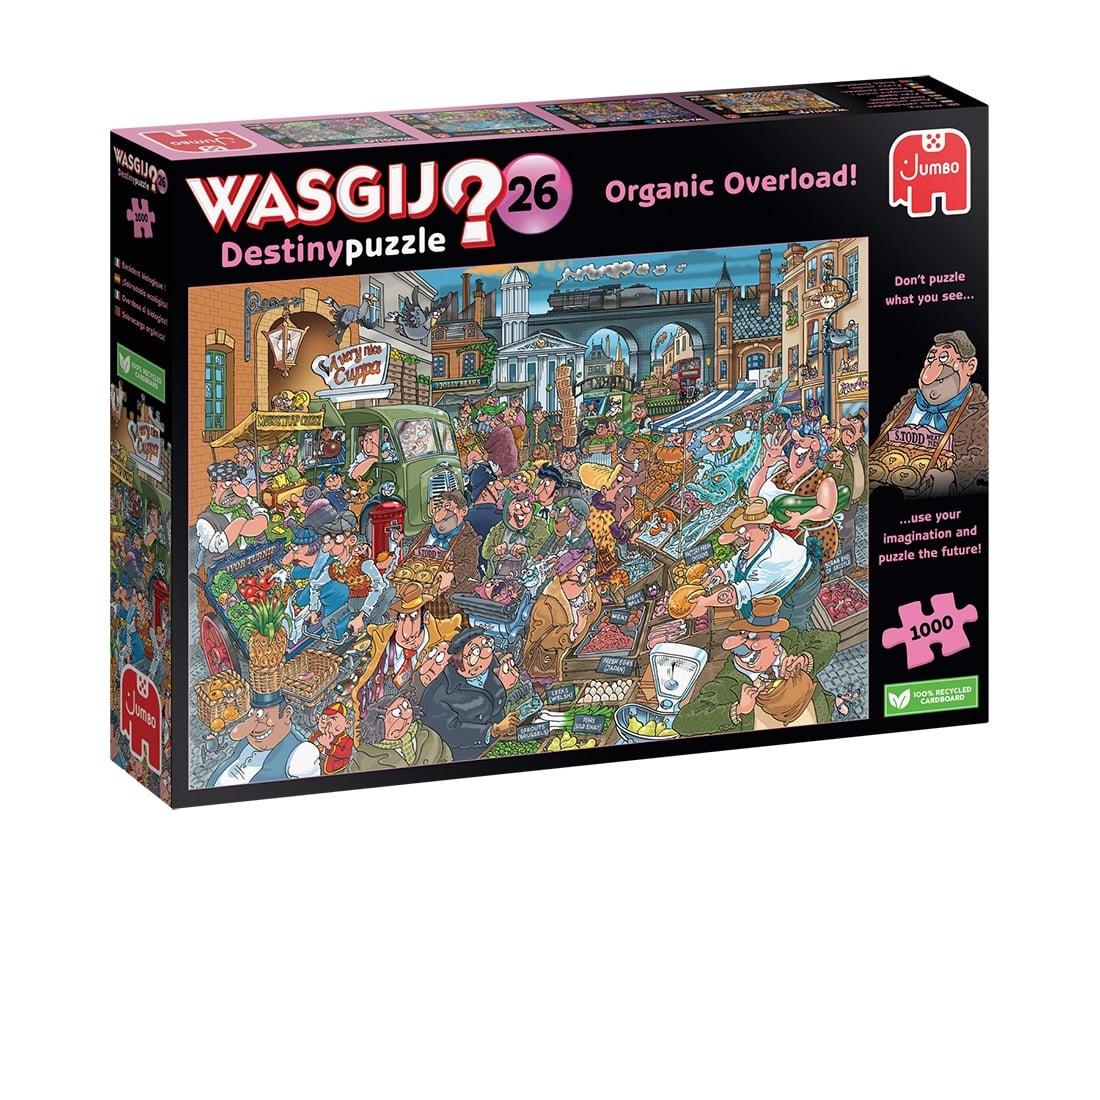 Wasgij' Destiny 26 Puzzle 1000 Teile - Organic Overload